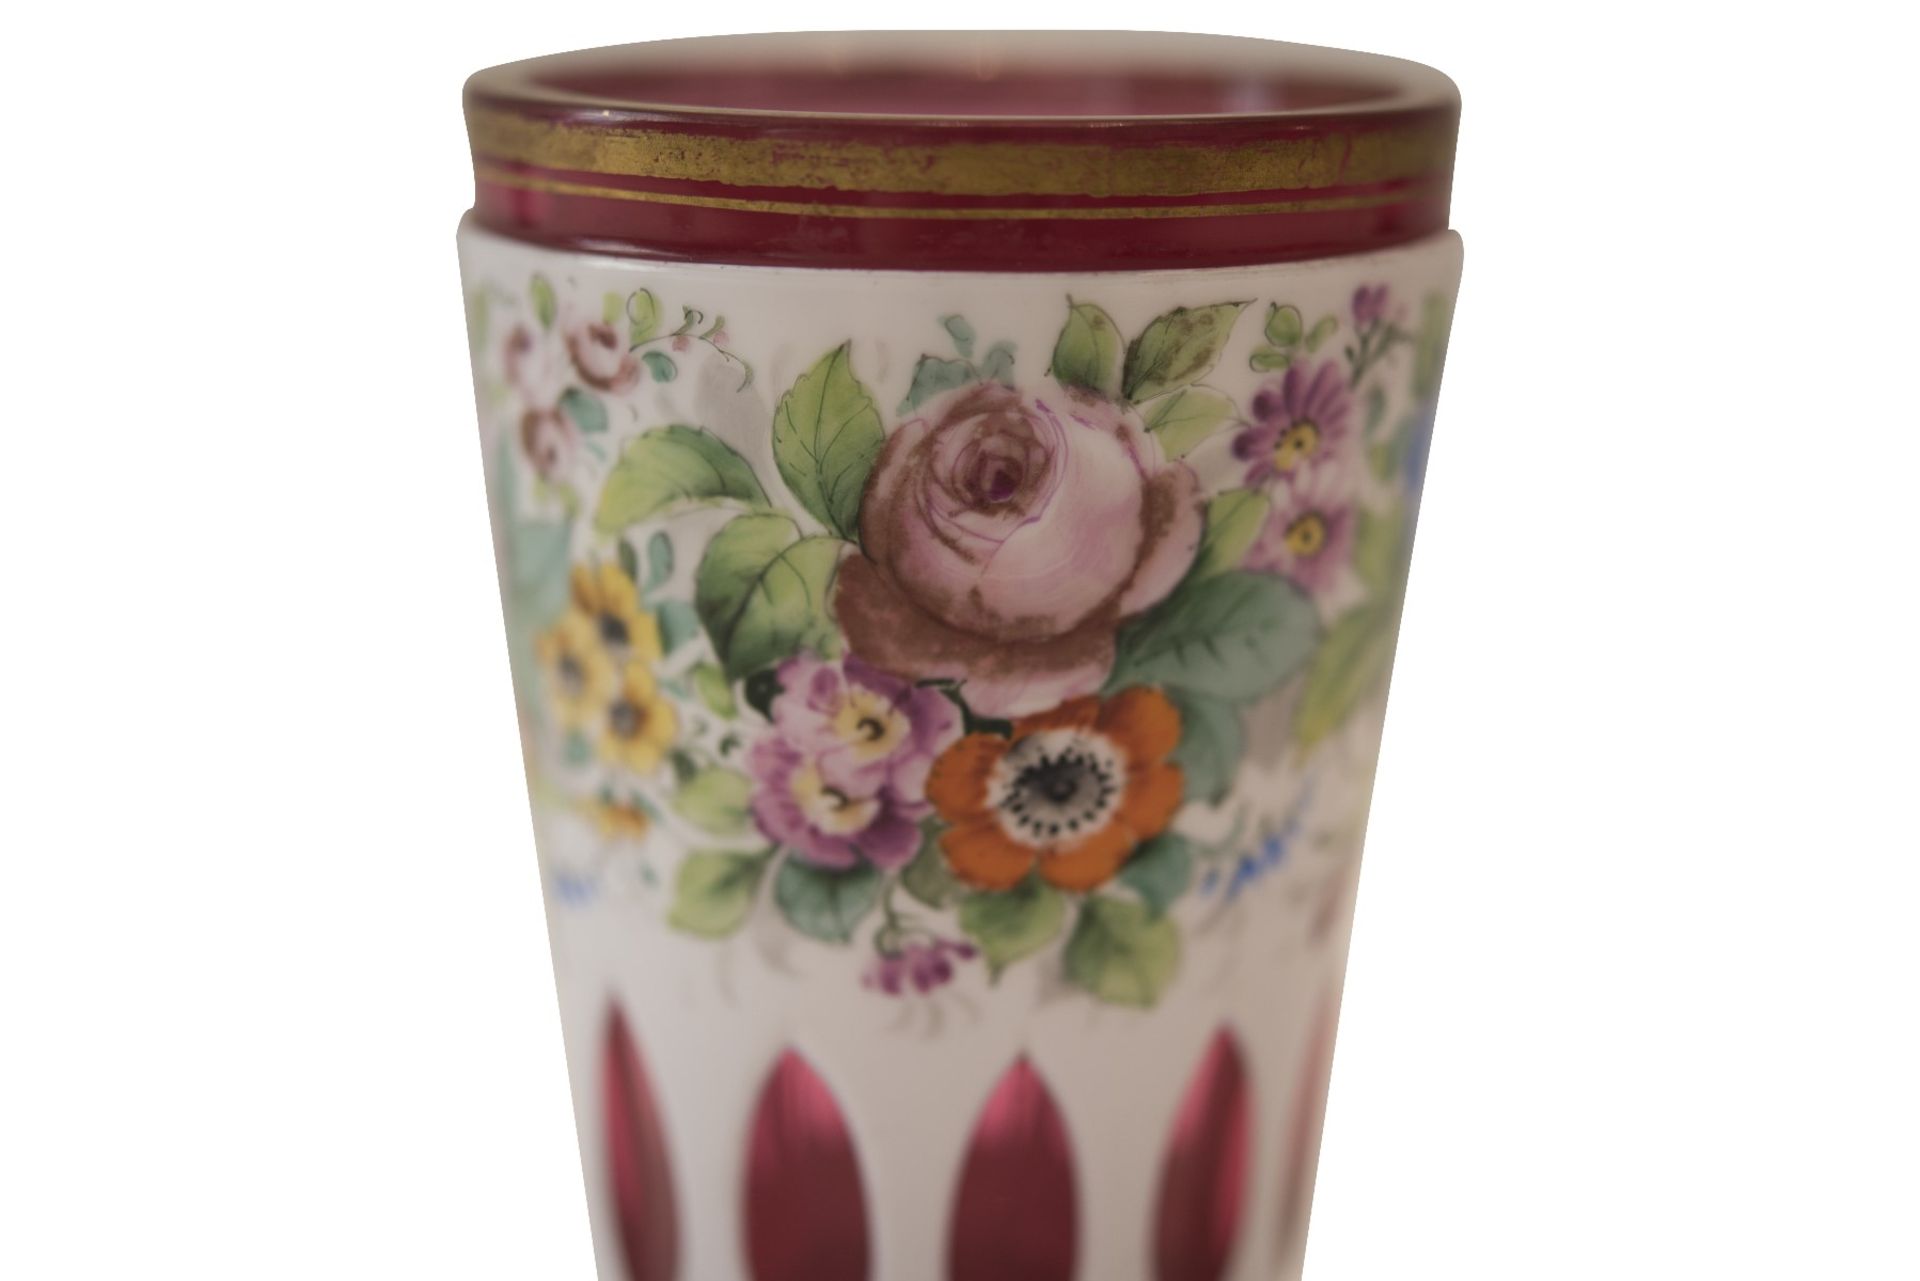 Porcelain mug with glass insert - Image 2 of 5